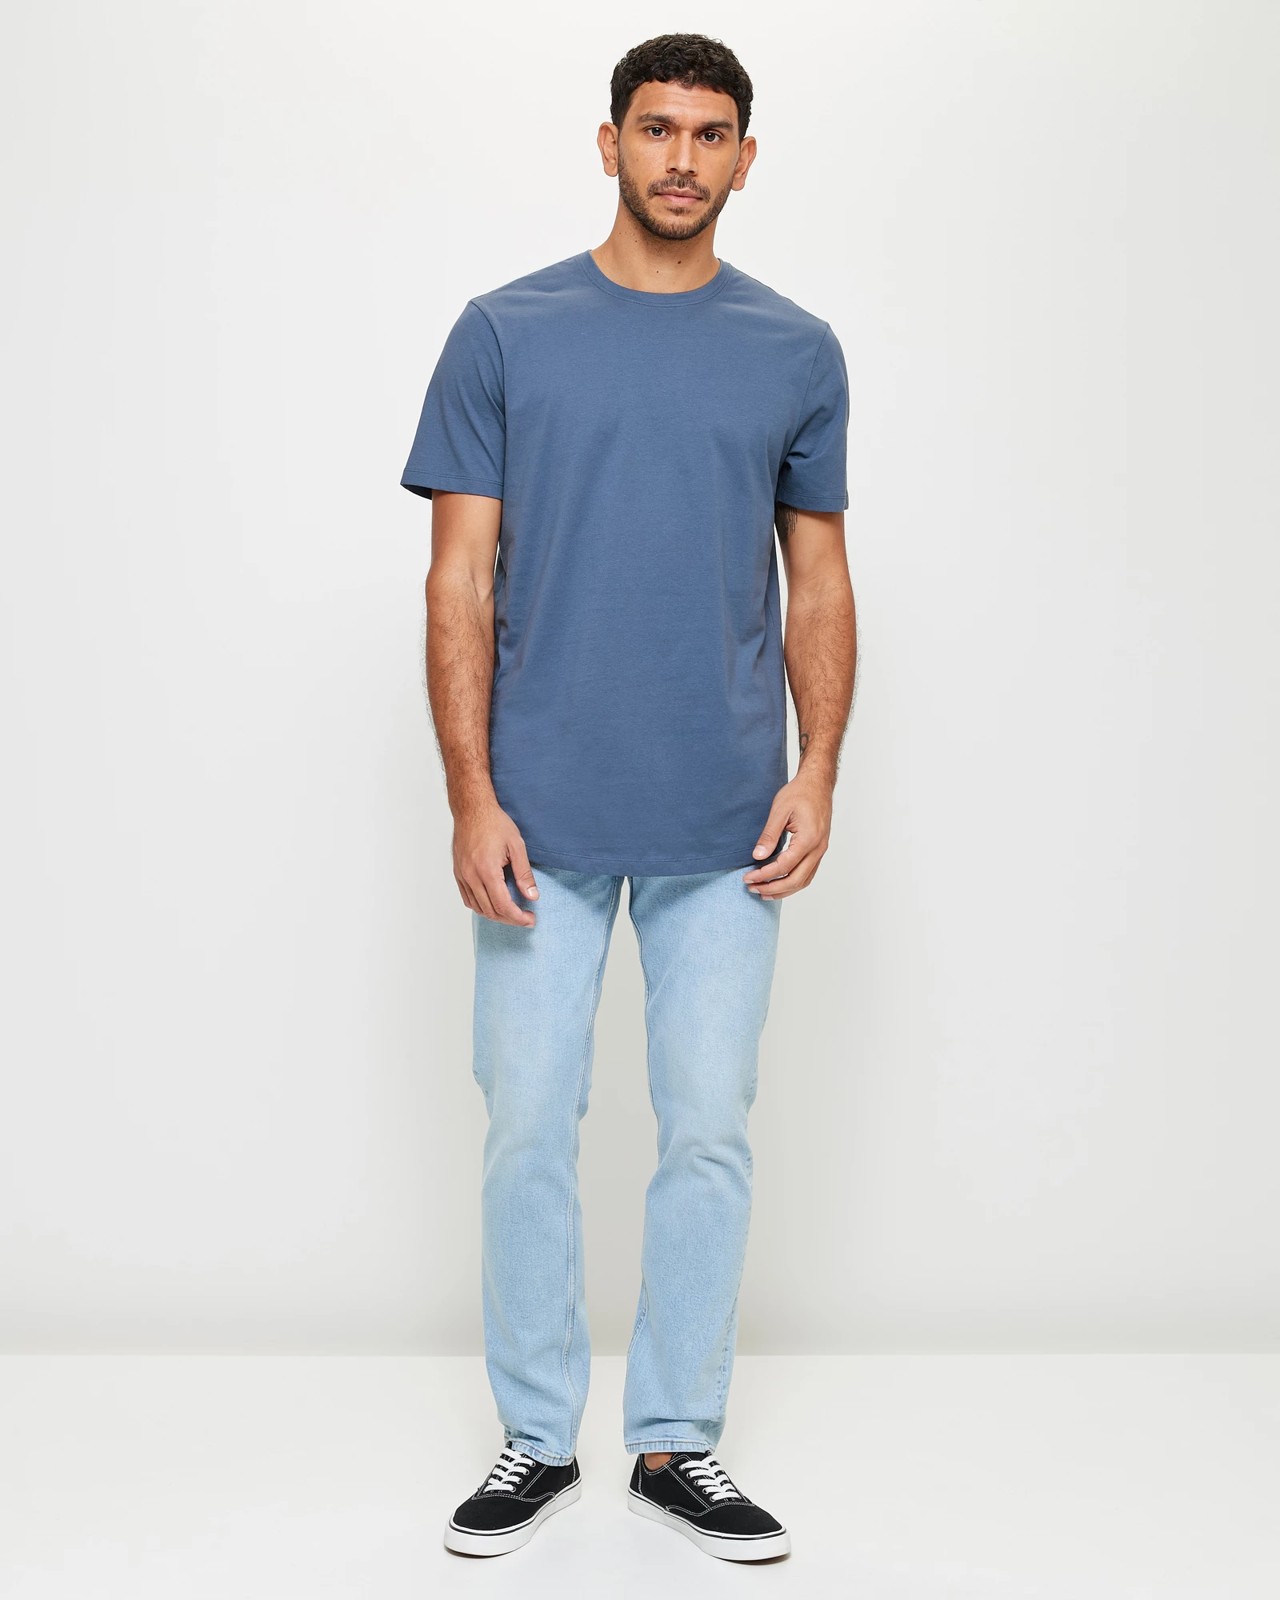 Australian Cotton Curved Hem T-Shirt | Target Australia